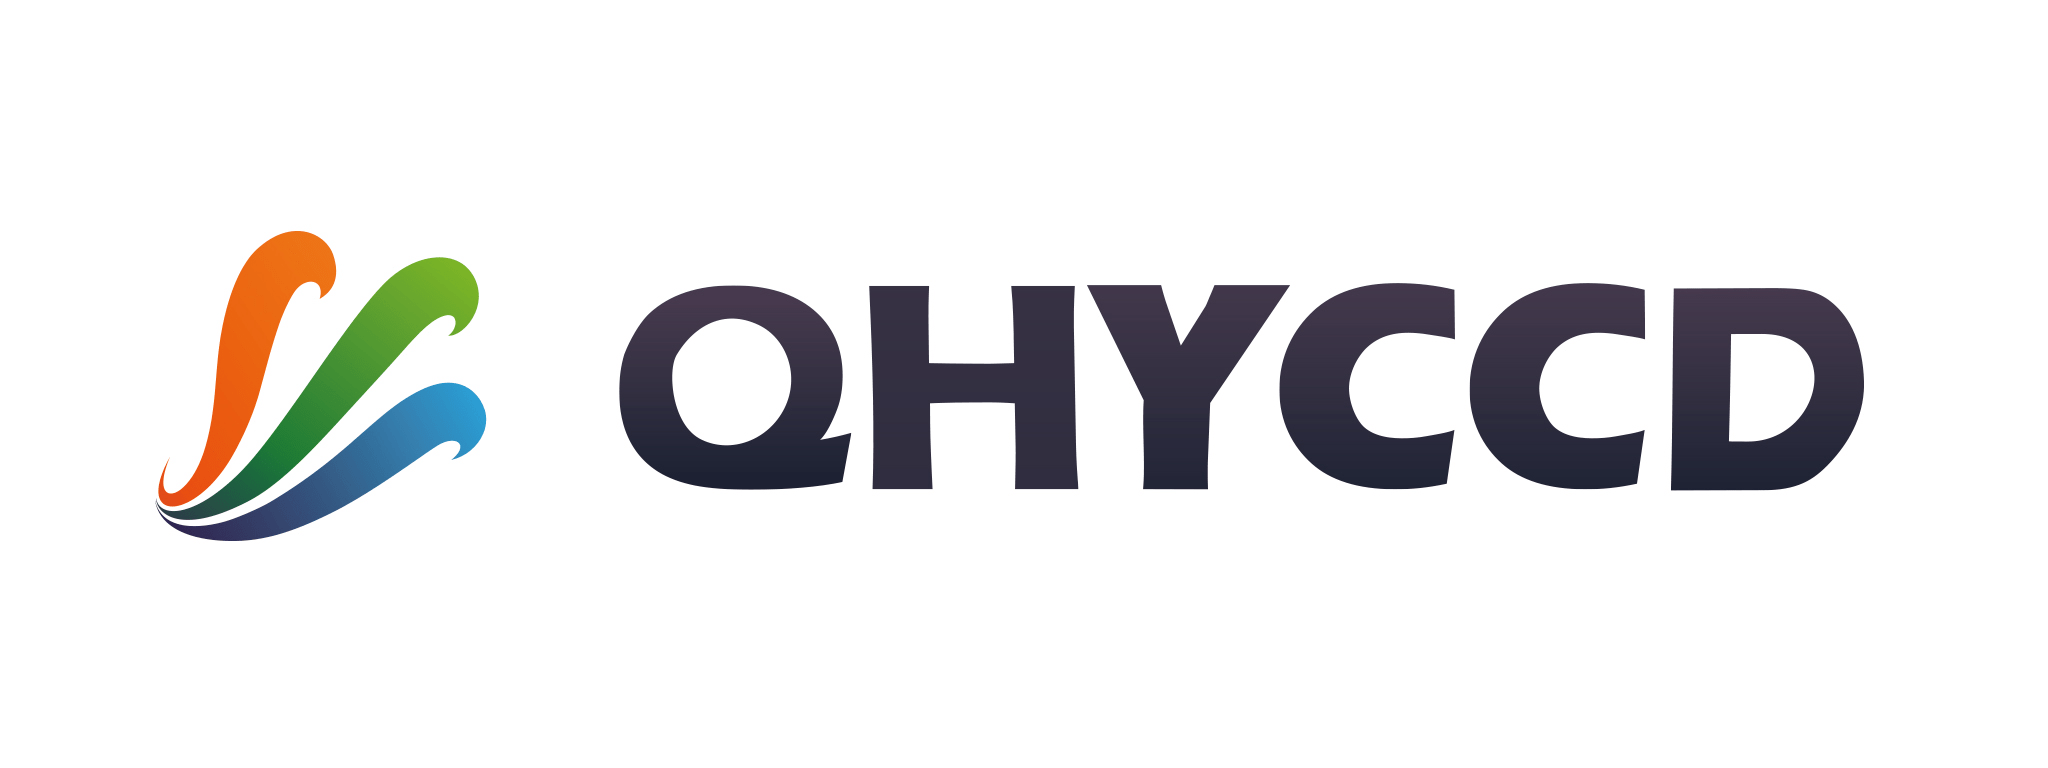 qhyccd logo 03